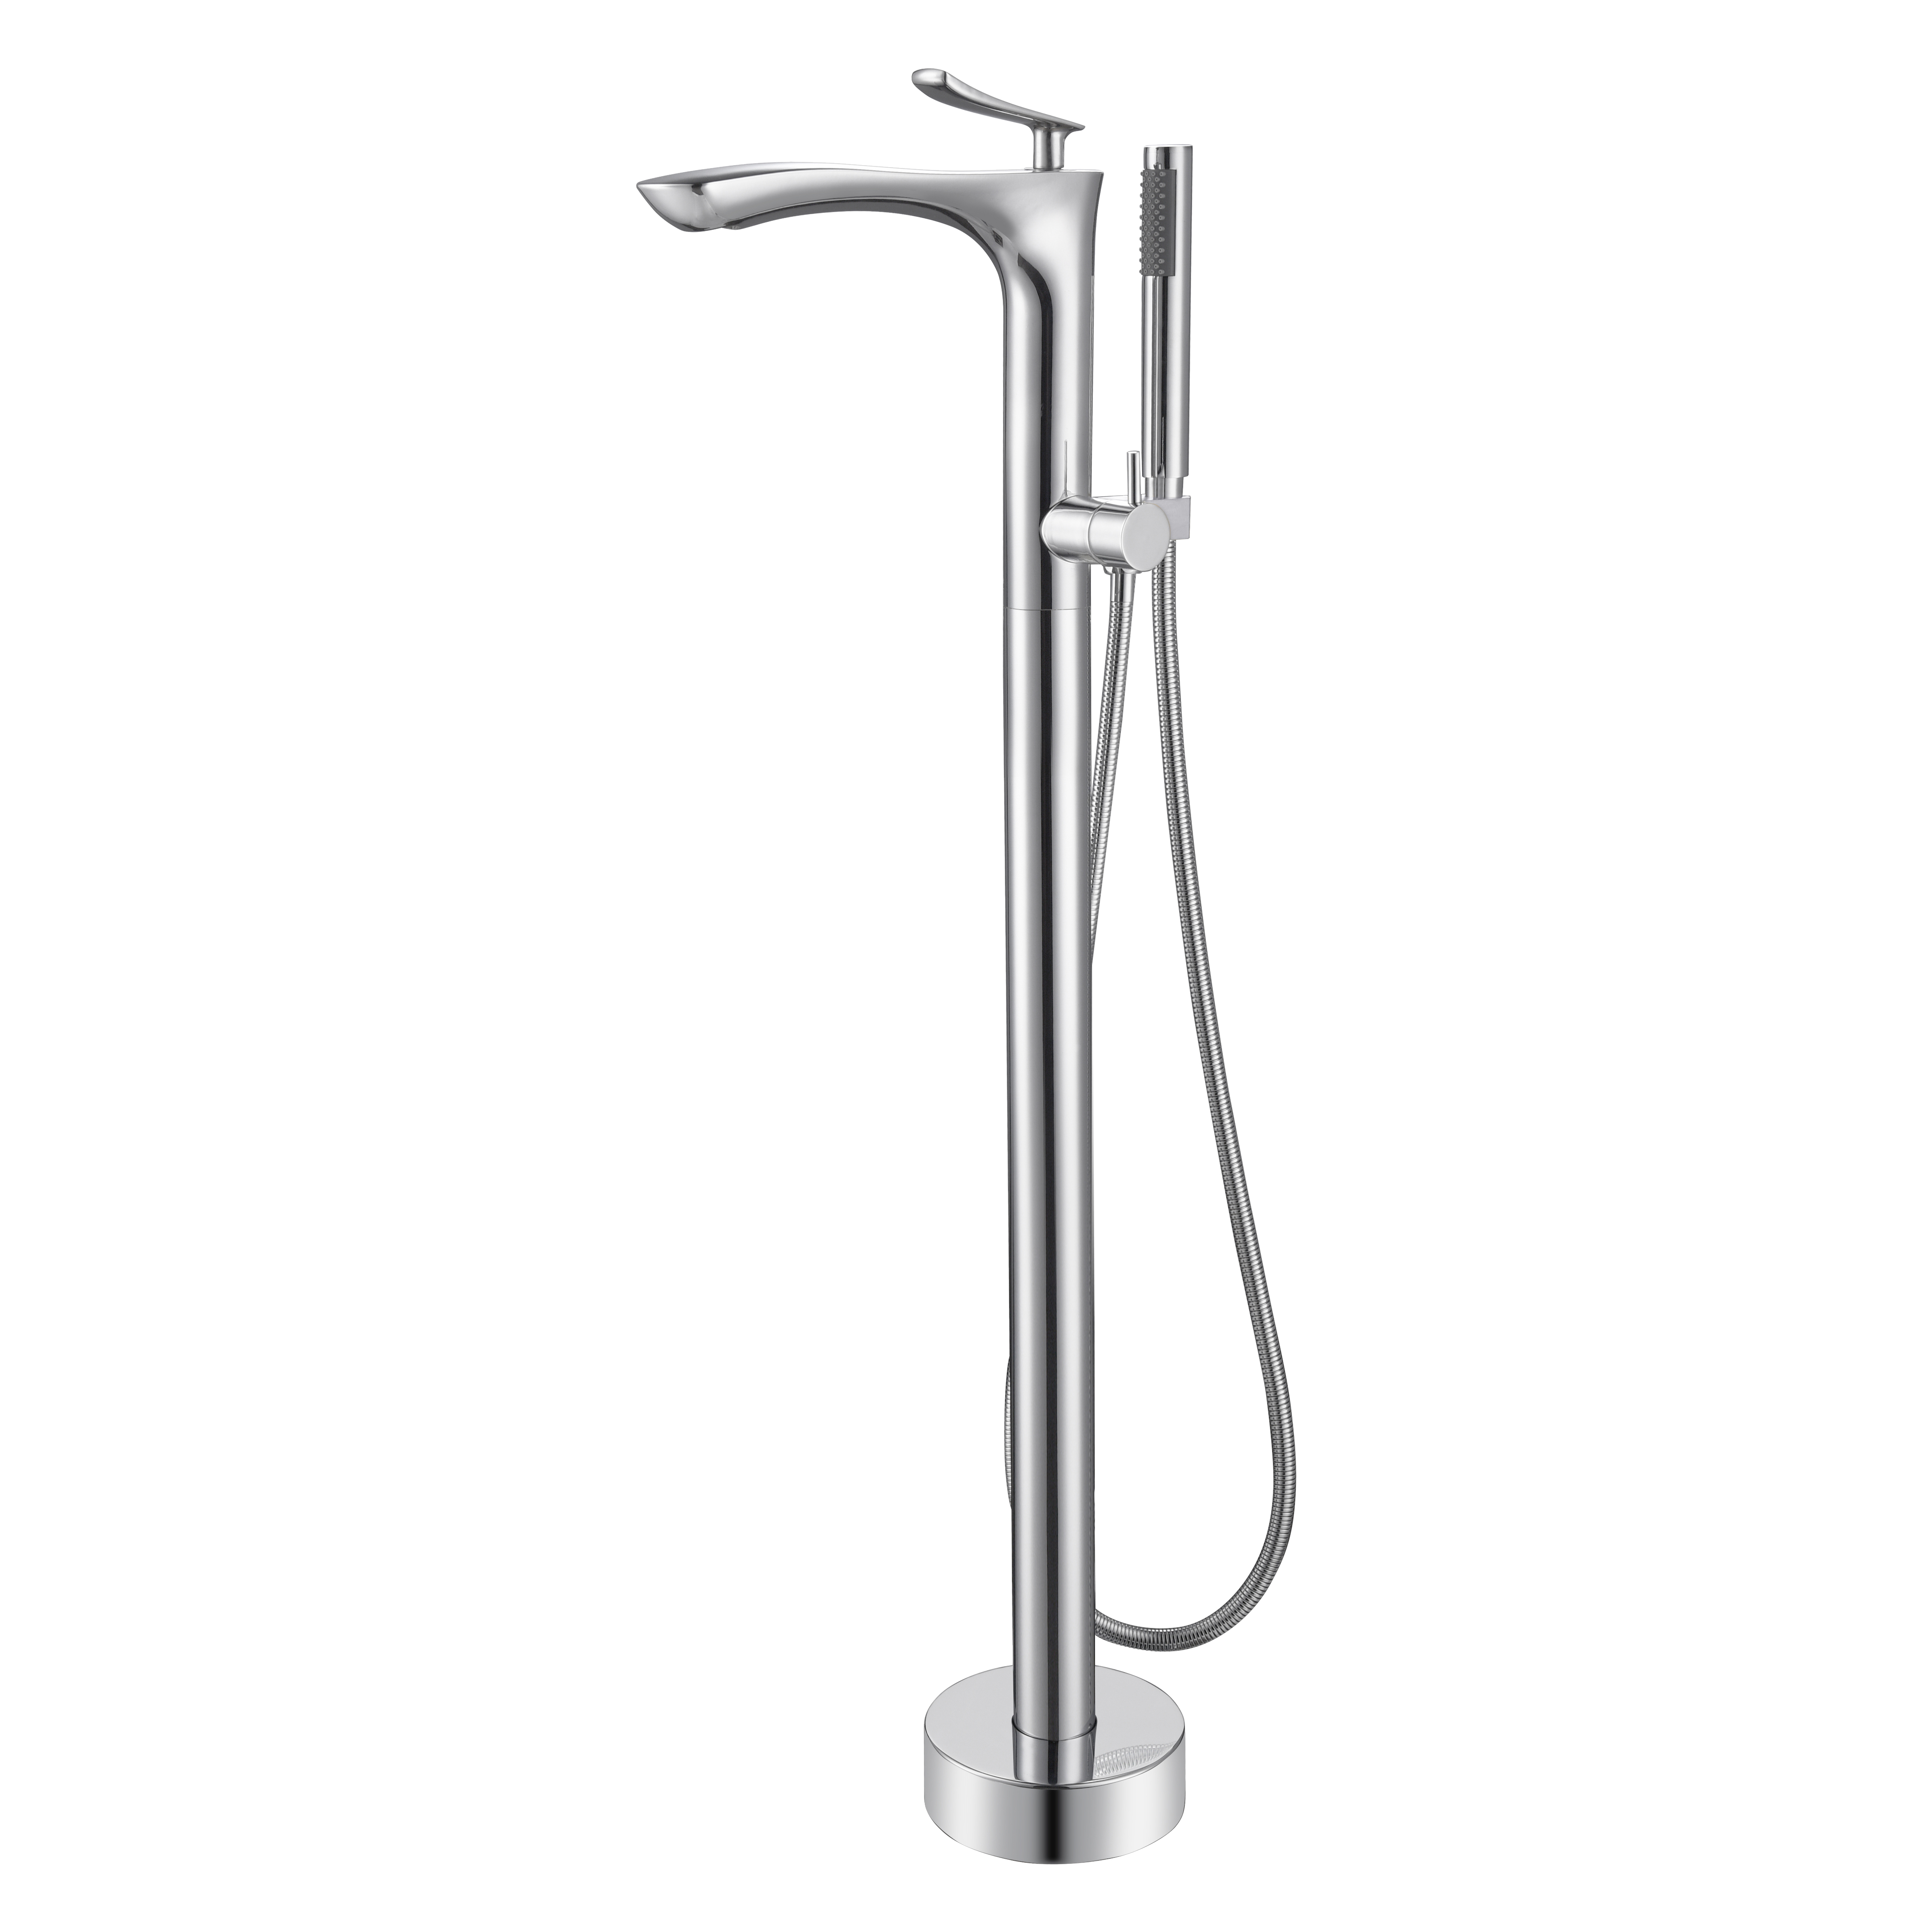 Unique Design WATERMARK Matt Black Freestanding Faucet Floor Tap For Free Standing Bath